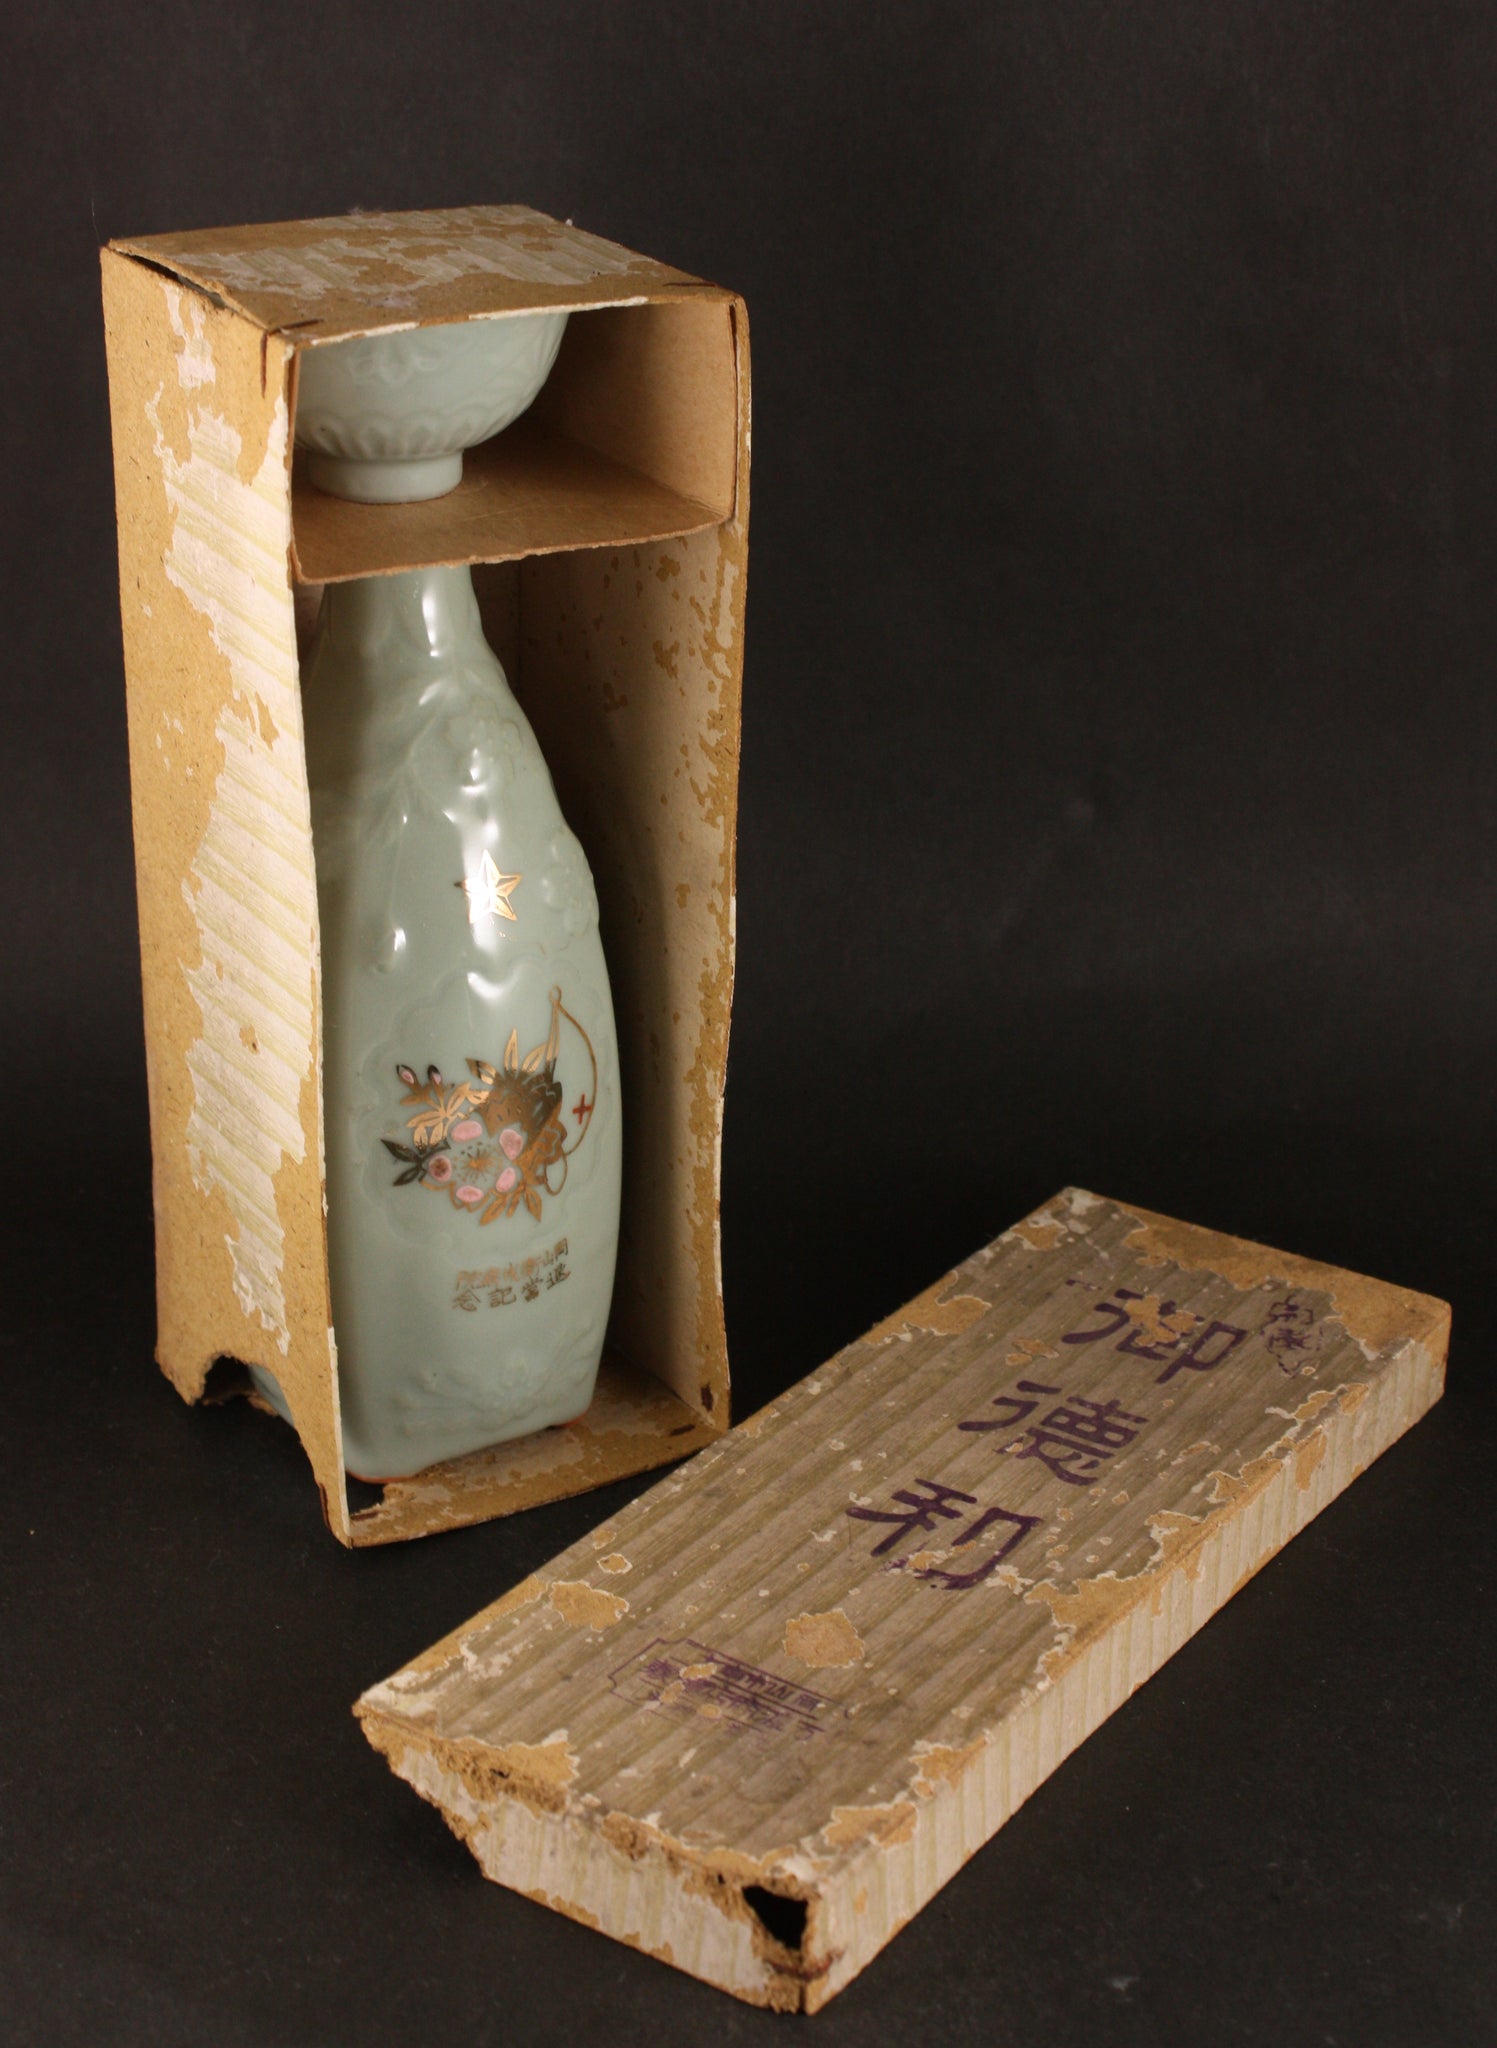 Rare Antique Japanese Okayama Military Hospital Sake Bottle and Cup Set